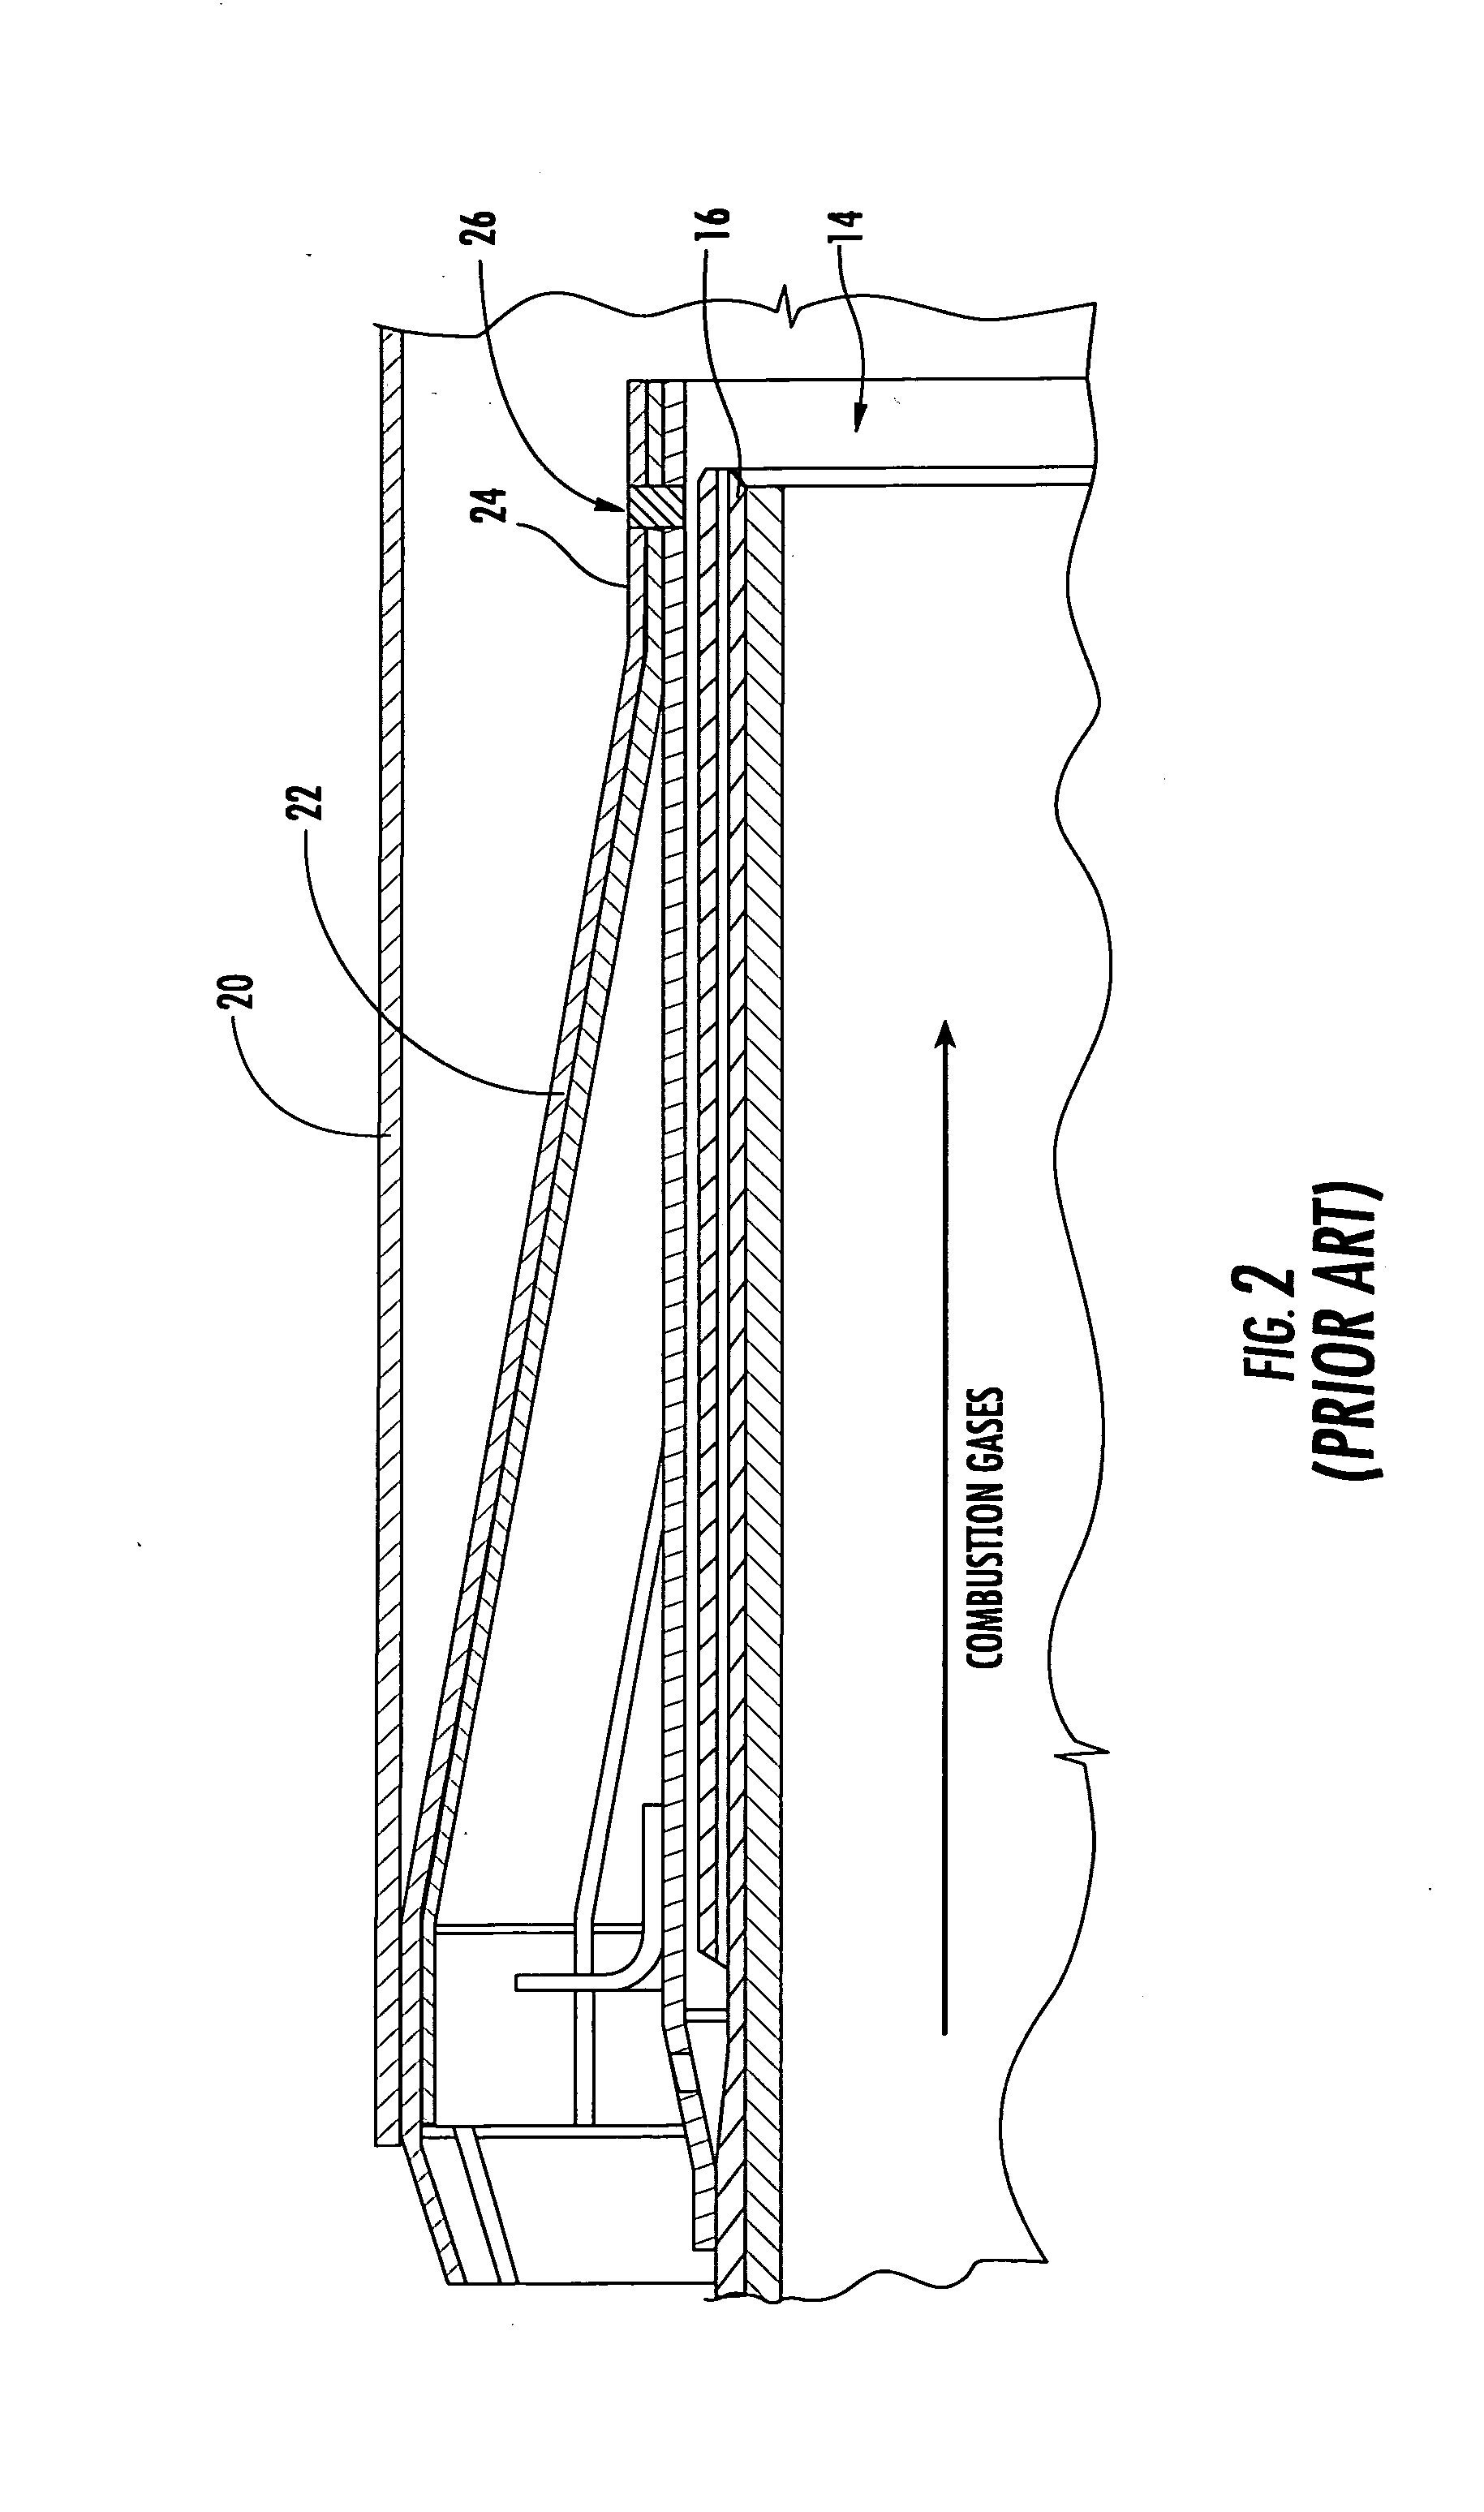 Combustor spring clip seal system